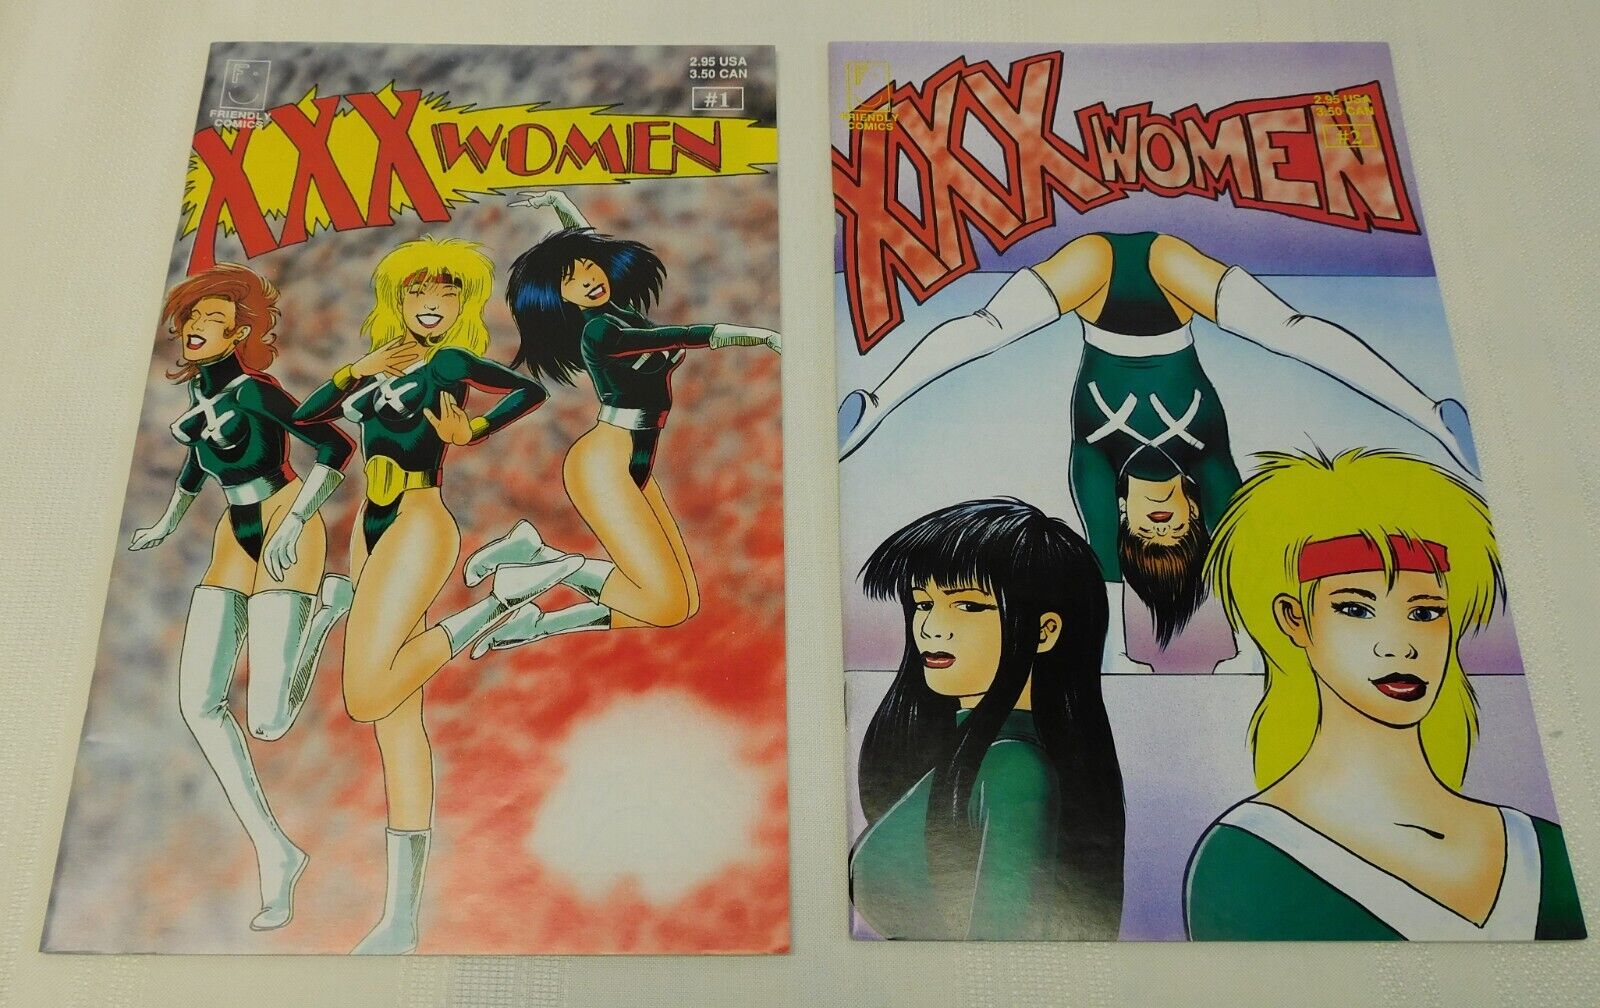 Triple XXX Women #1 & #2 1991 1992 Friendly Comics Limited Edition 